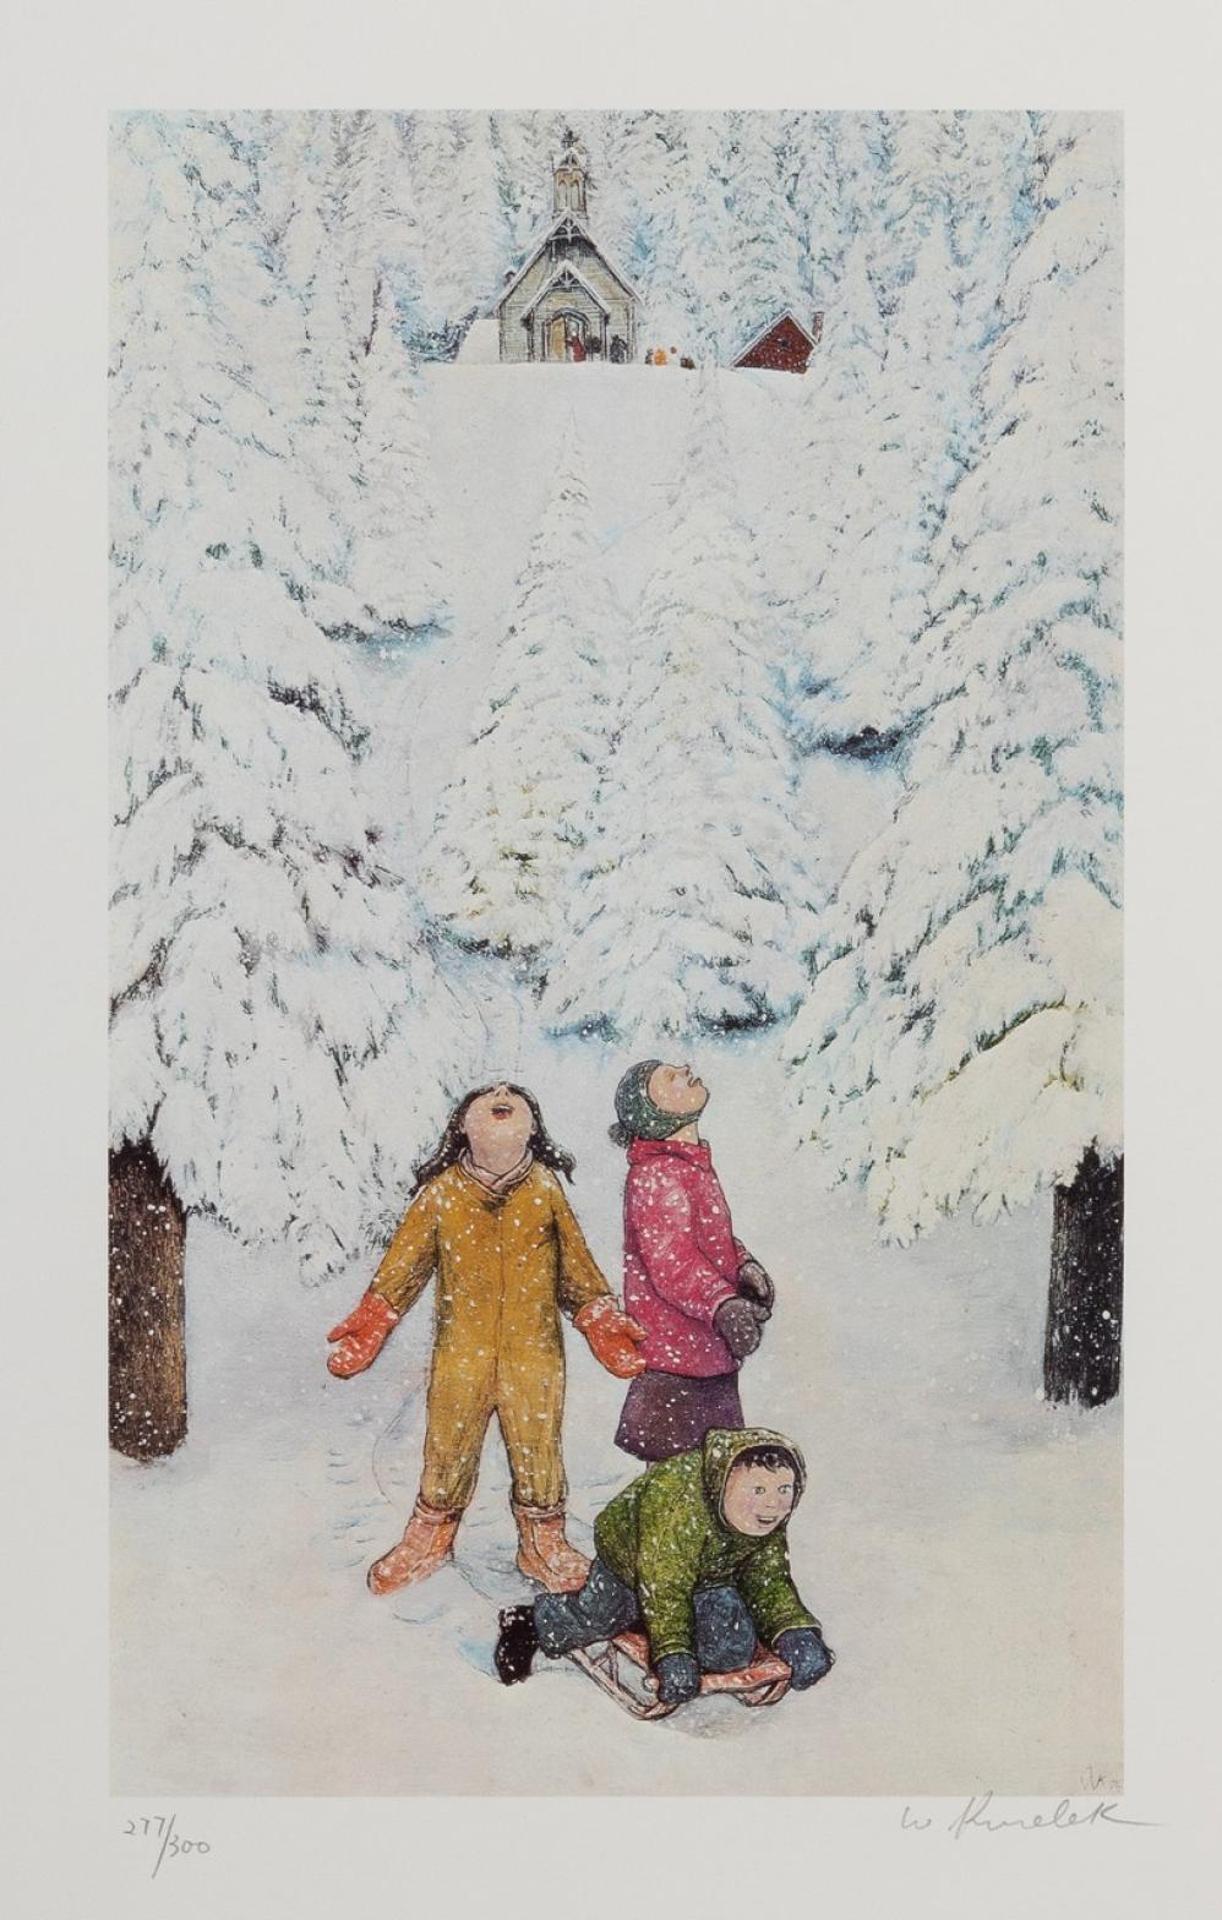 William Kurelek (1927-1977) - Catching Snowflakes